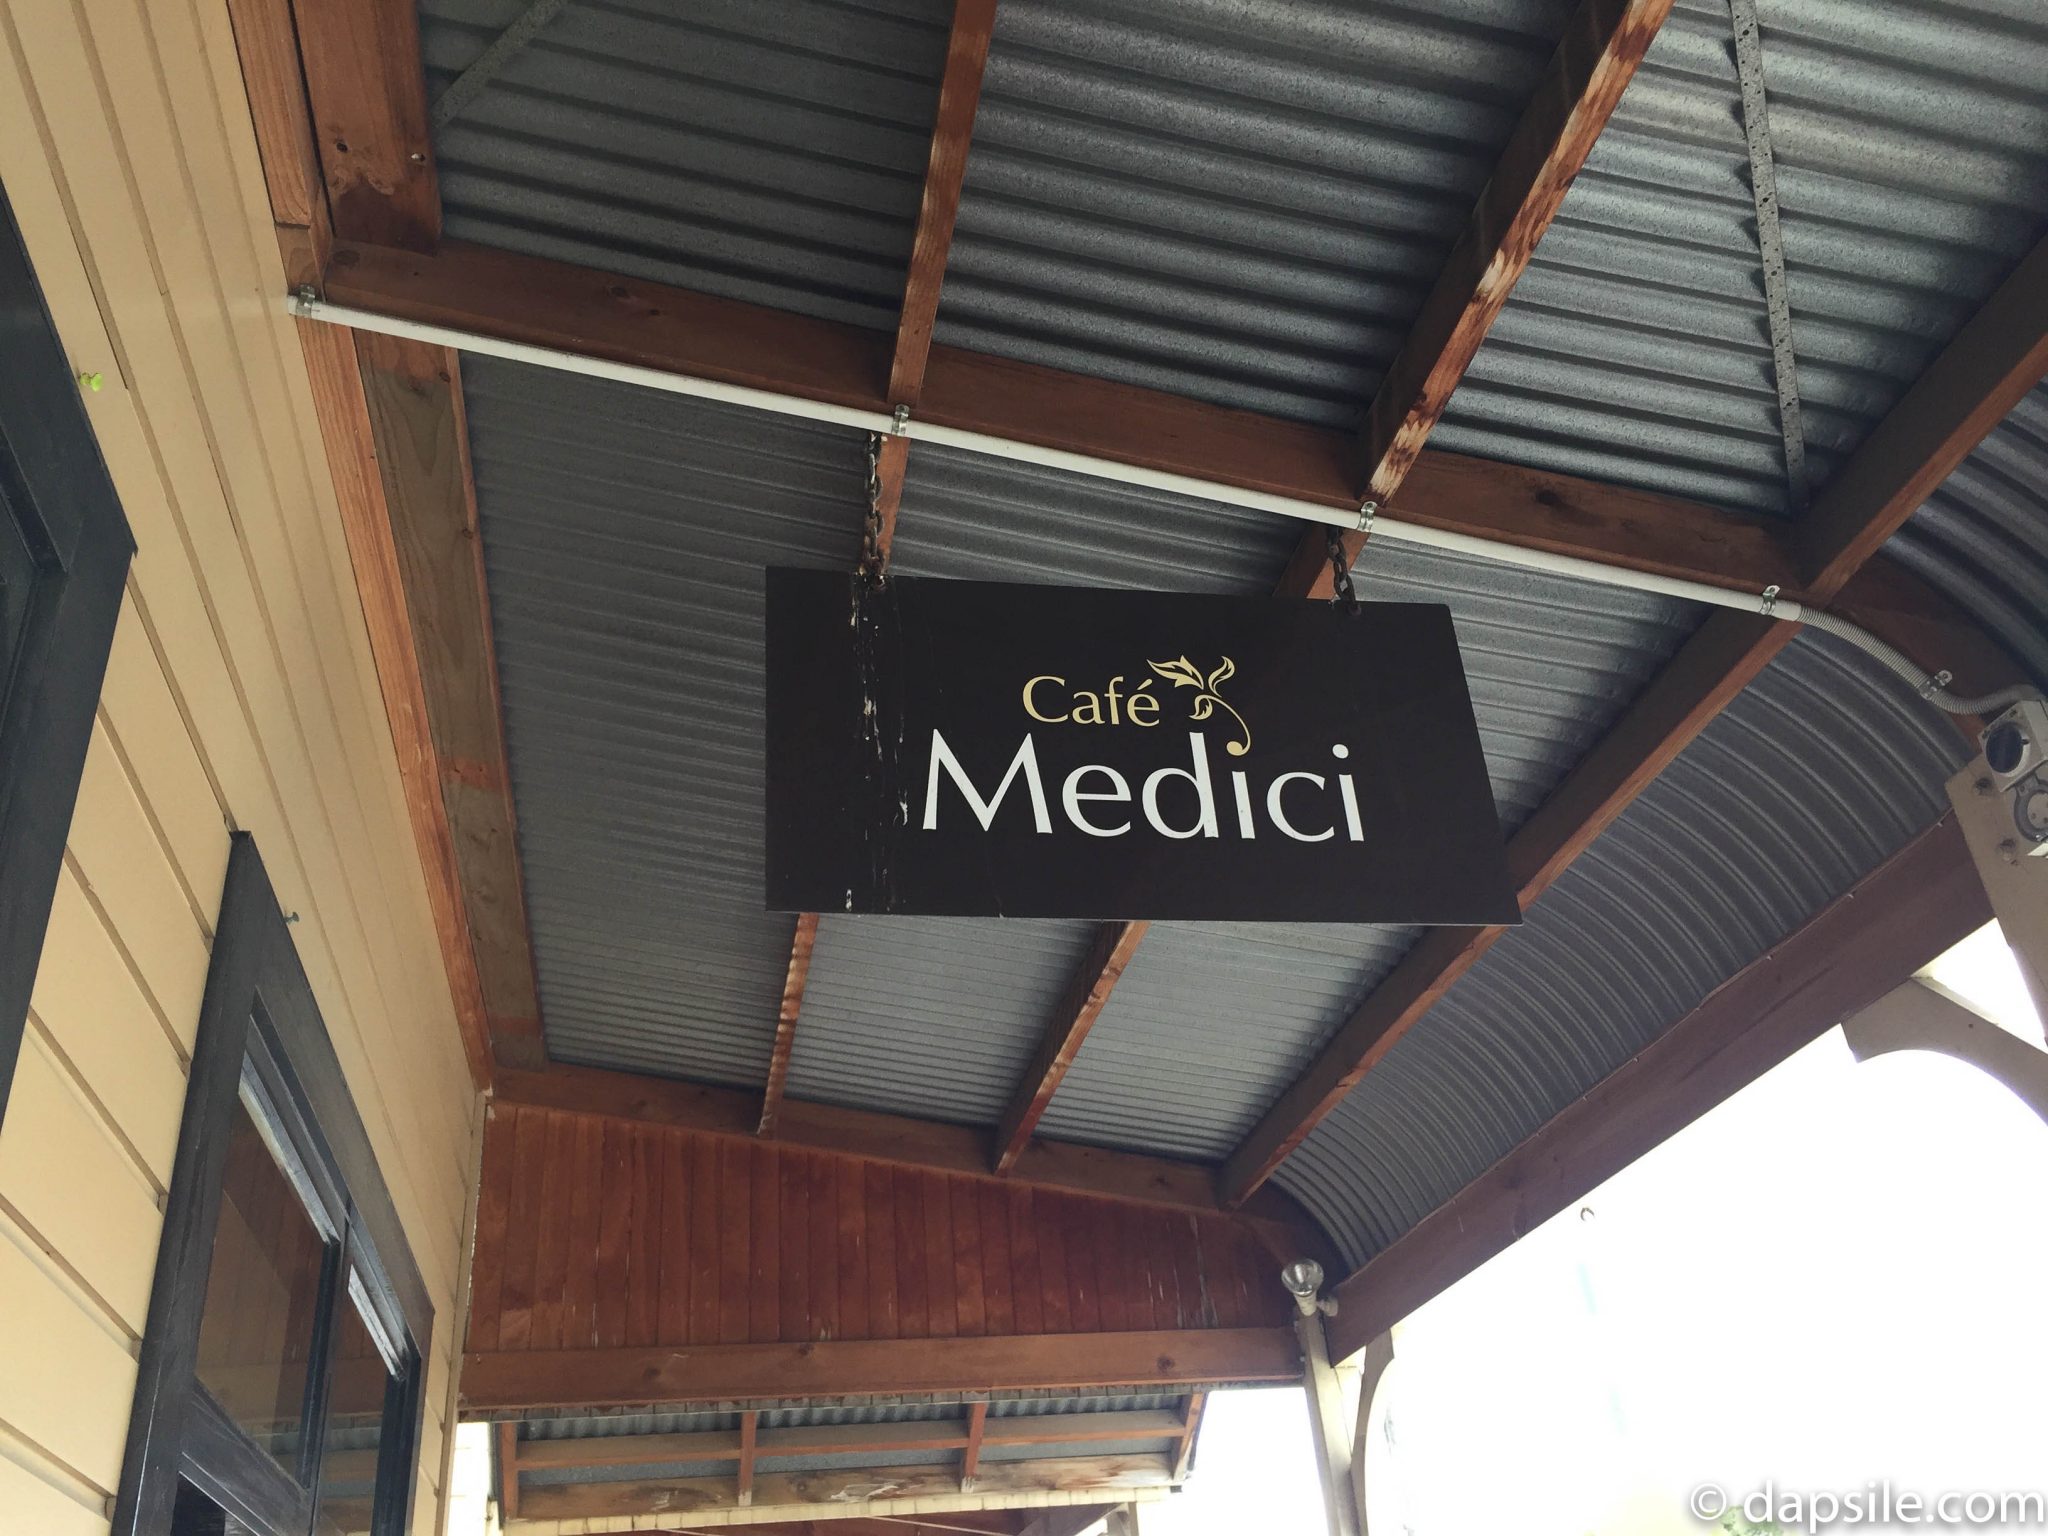 Cafe Medici Sign in Martinborough